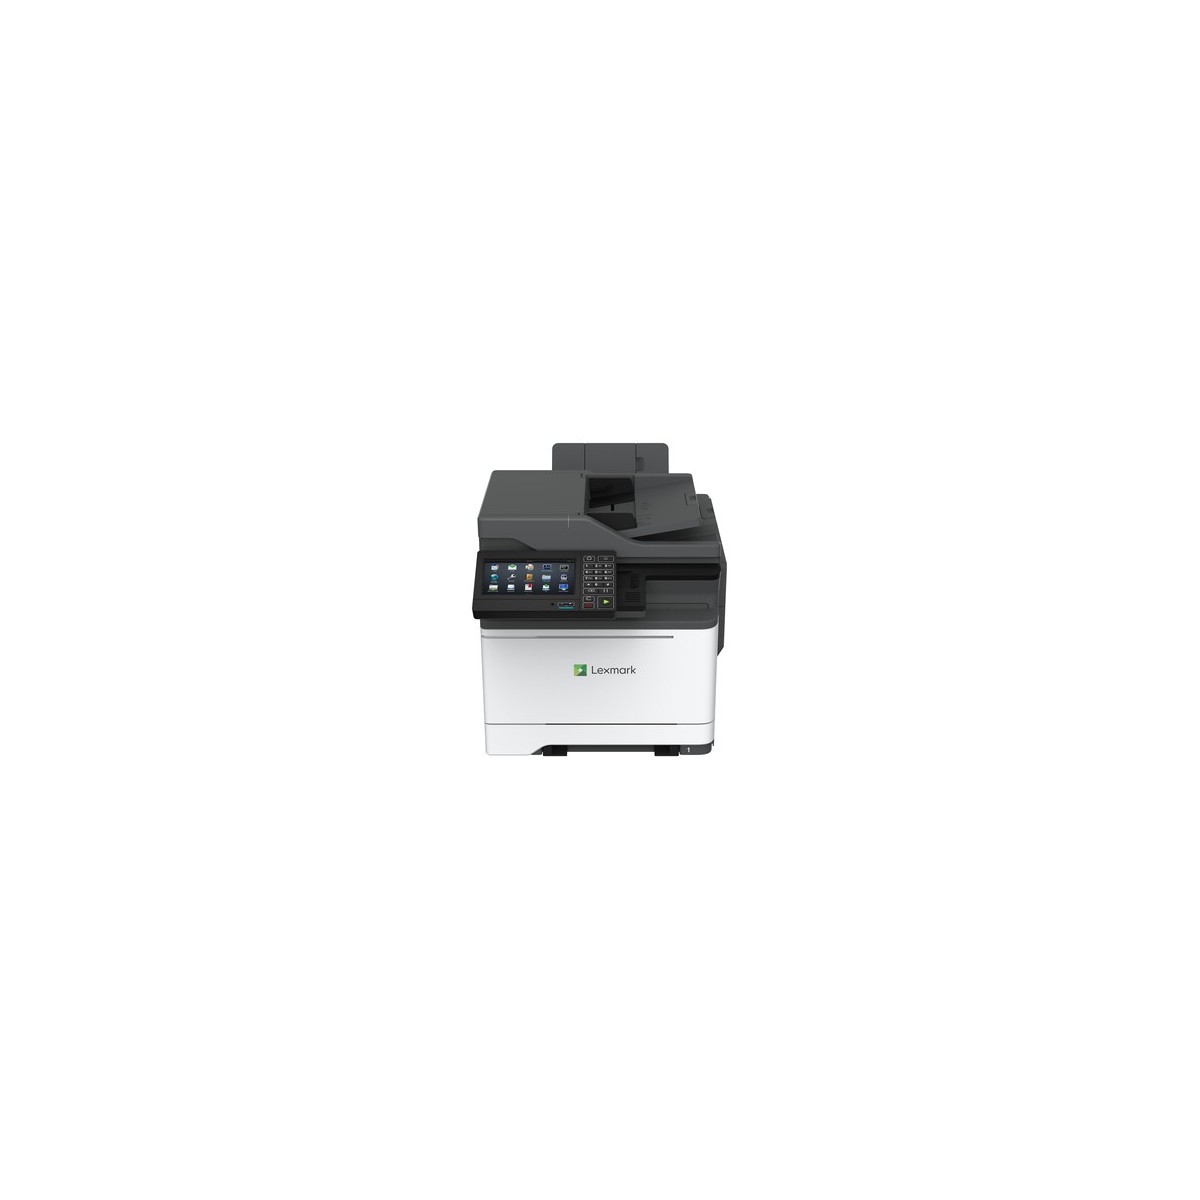 Lexmark XC4240 - Laser - Colour printing - Colour copying - Colour scanning - A4 - Black - White